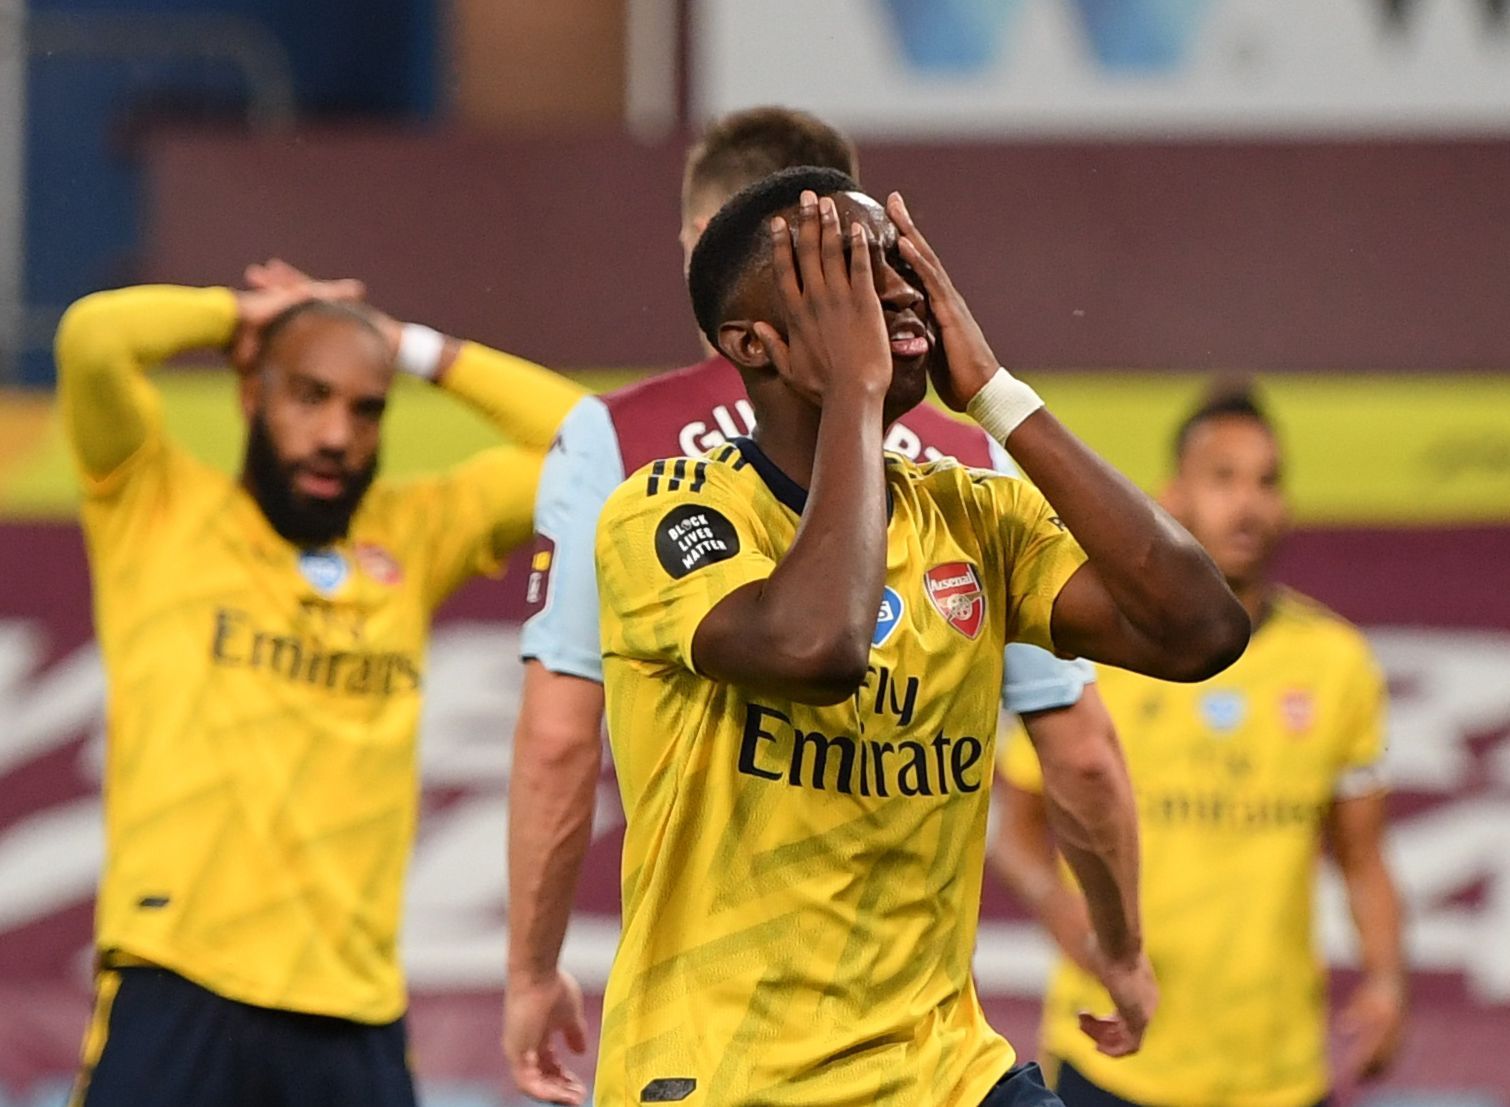 37. kolo anglické fotbalové ligy 2019/20, Aston Villa - Arsenal: Zklamaný Eddie Nketiah z Arsenalu